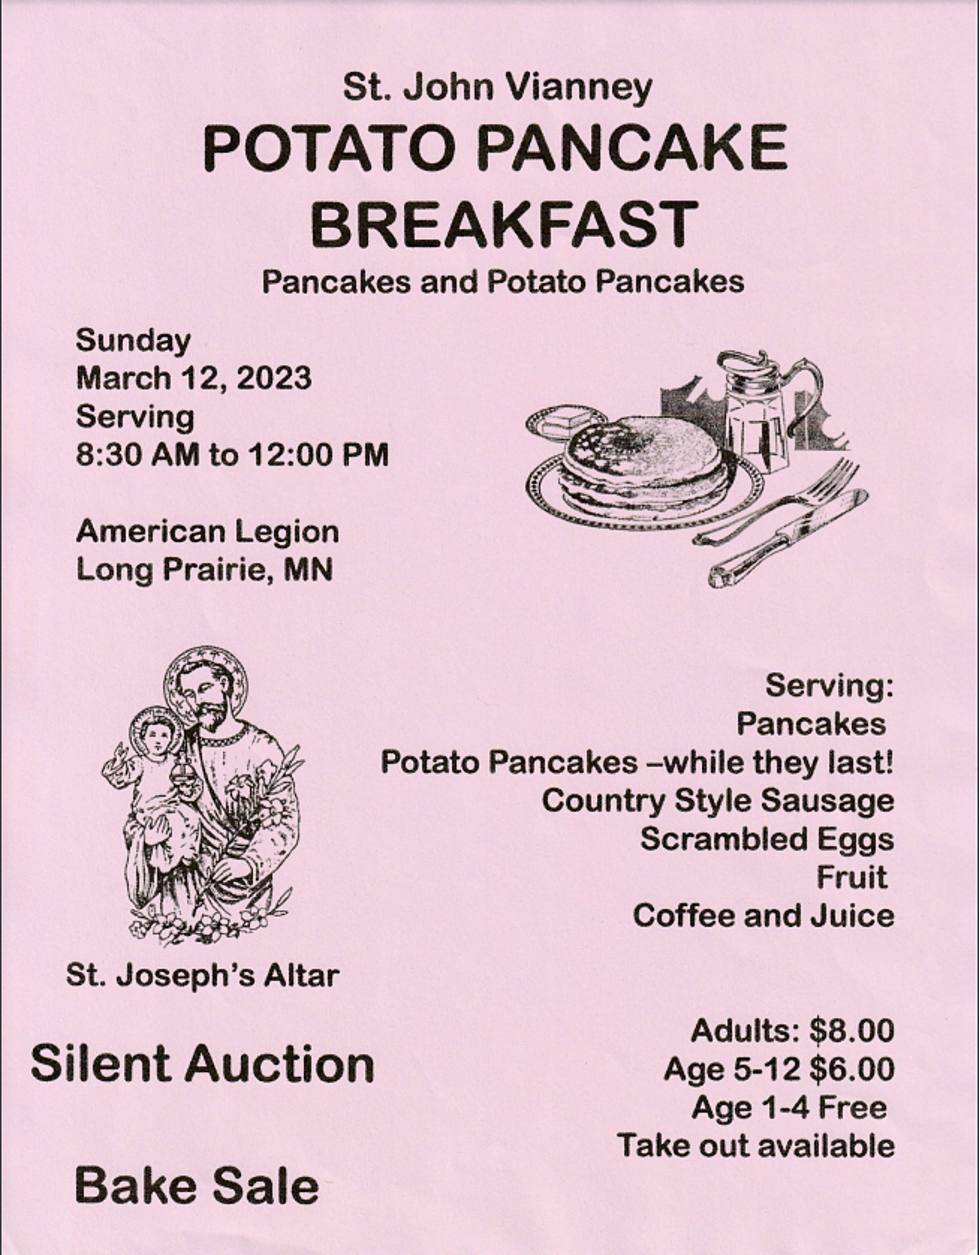 St. John Vianney Potato Pancake Breakfast